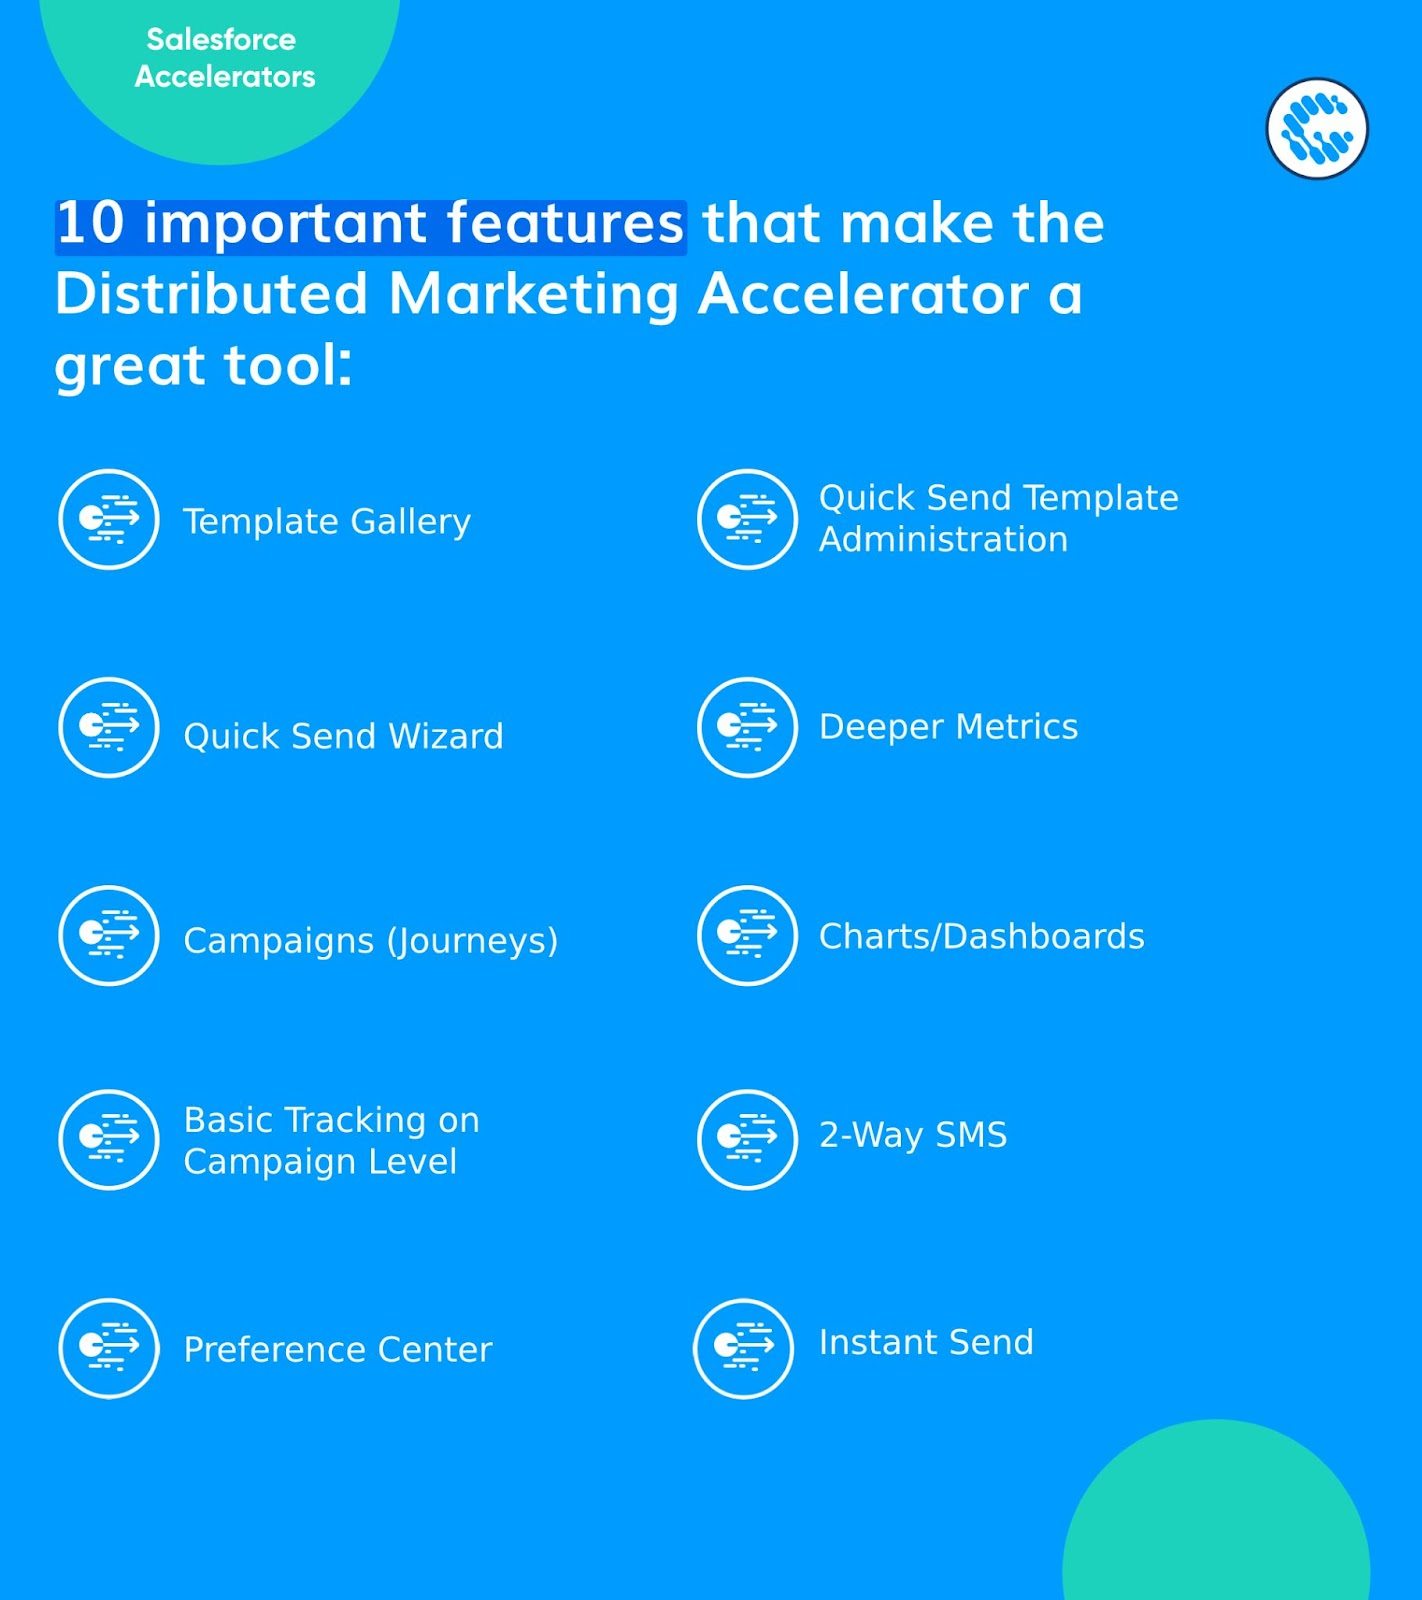 Salesforce Accelerator: Distributed Marketing Accelerator